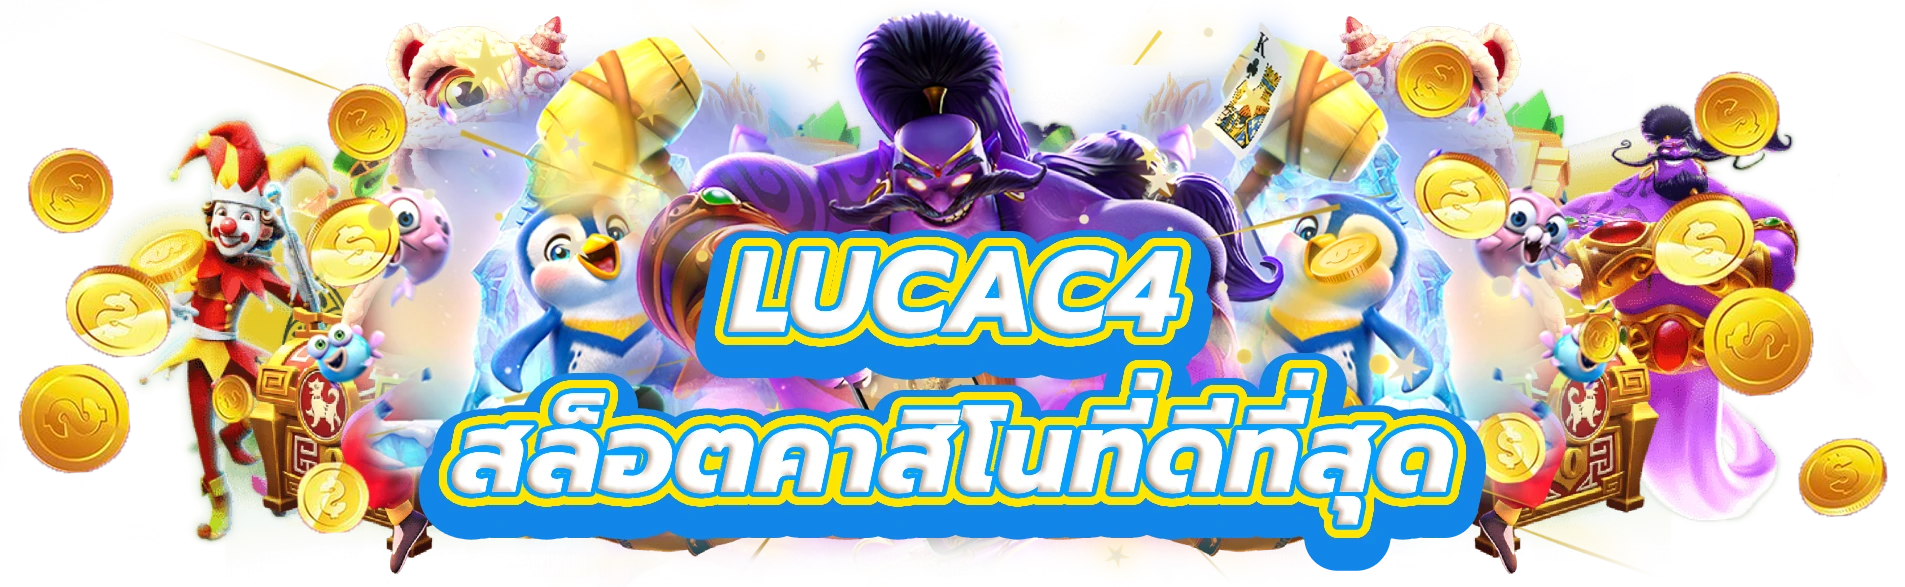 lucac4 ก้าวเข้าสู่โลกของสล็อตคาสิโนที่ดีที่สุด